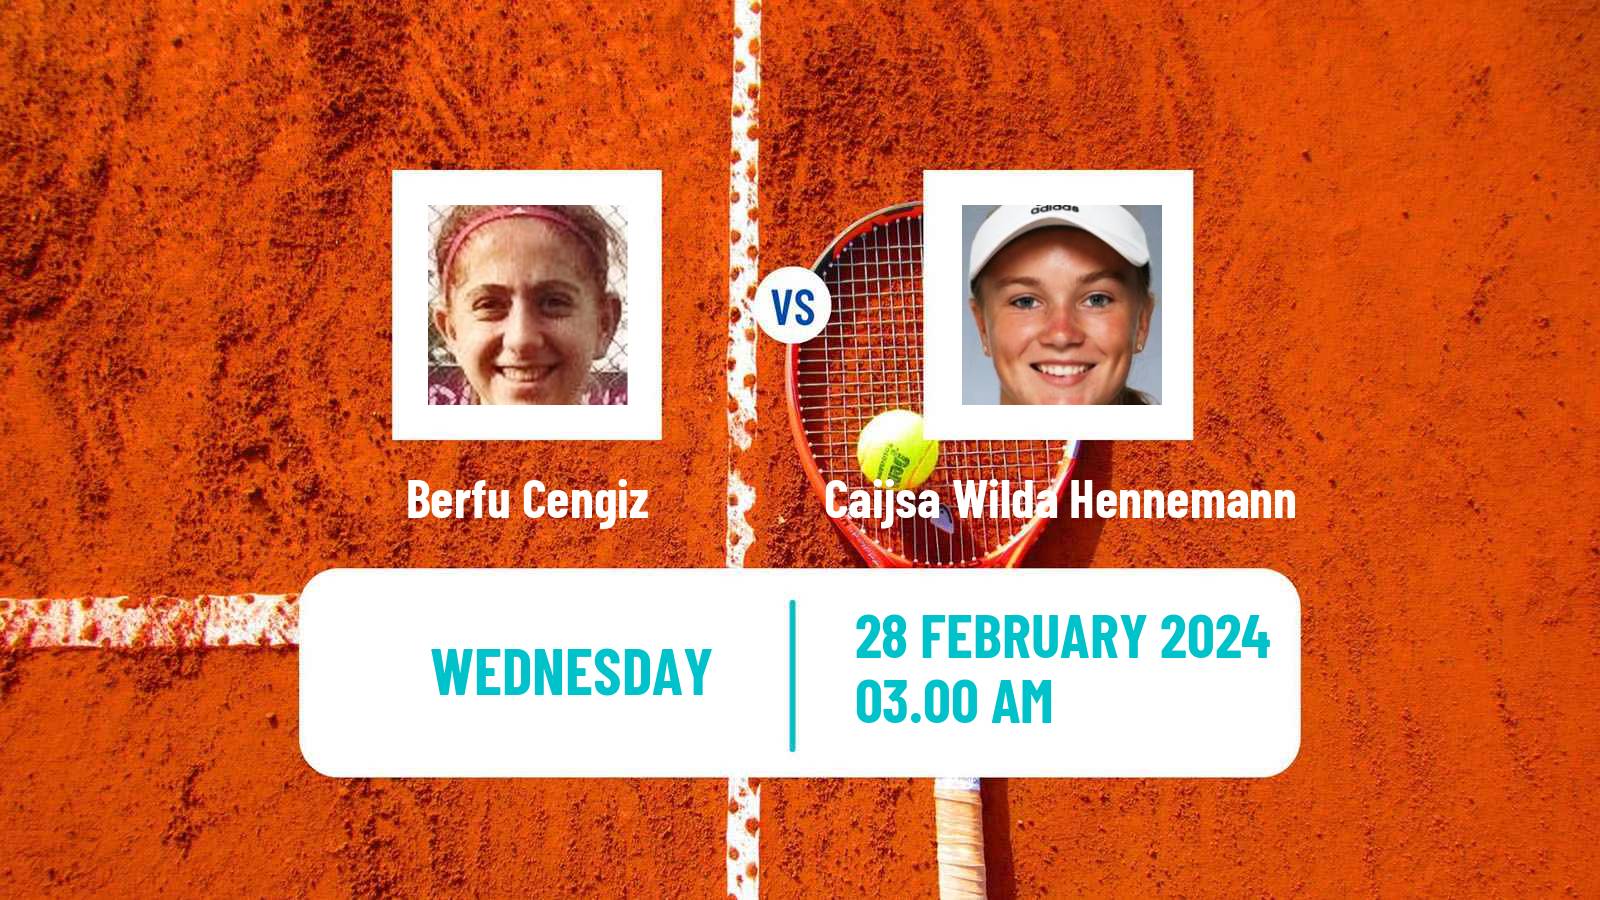 Tennis ITF W35 Helsinki Women Berfu Cengiz - Caijsa Wilda Hennemann